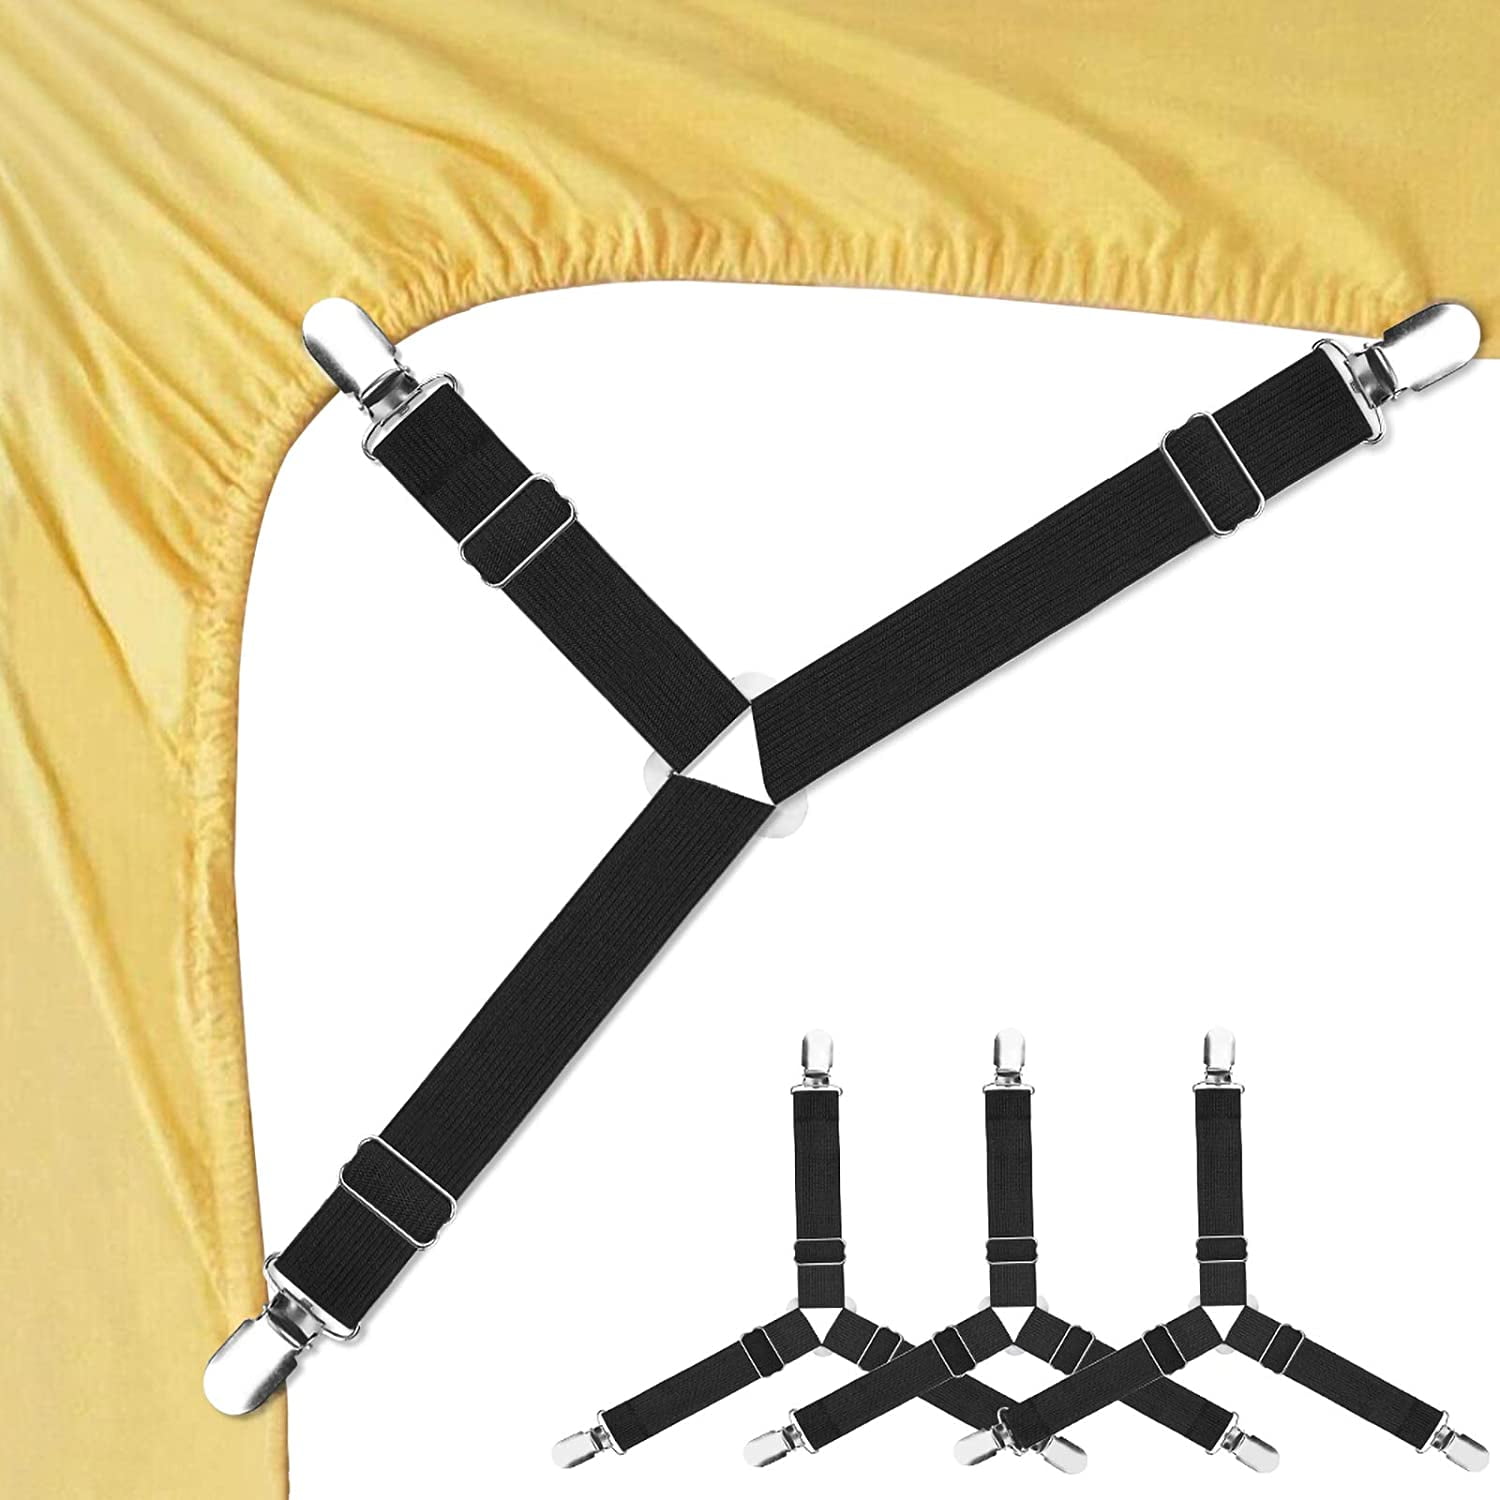 SZTHZDW 4 Pack RayTour Adjustable Bed Sheet Holder Fastener Straps for sale online 